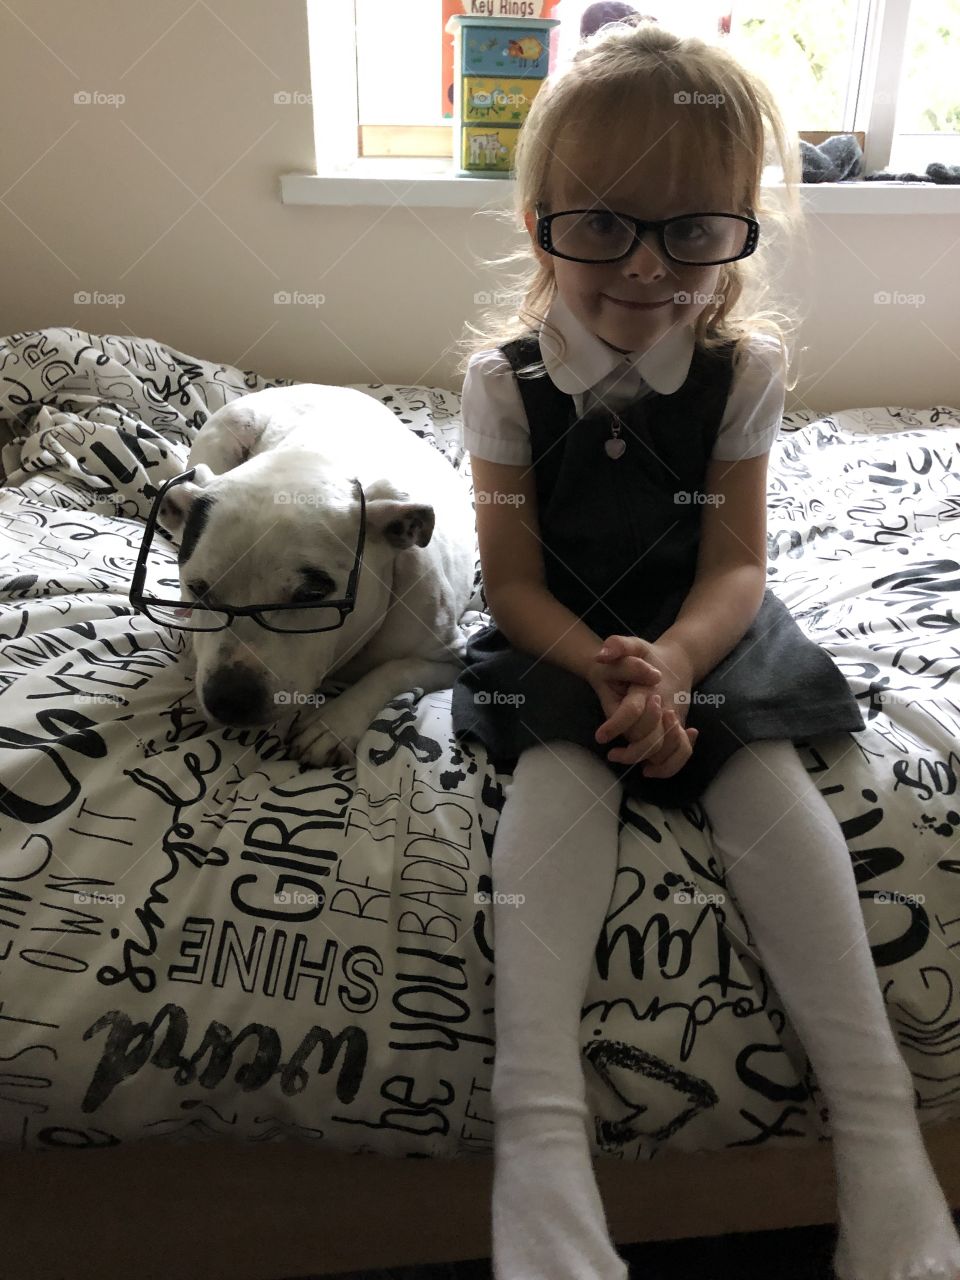 Little girl put glasses on the dog to play teacher’s 